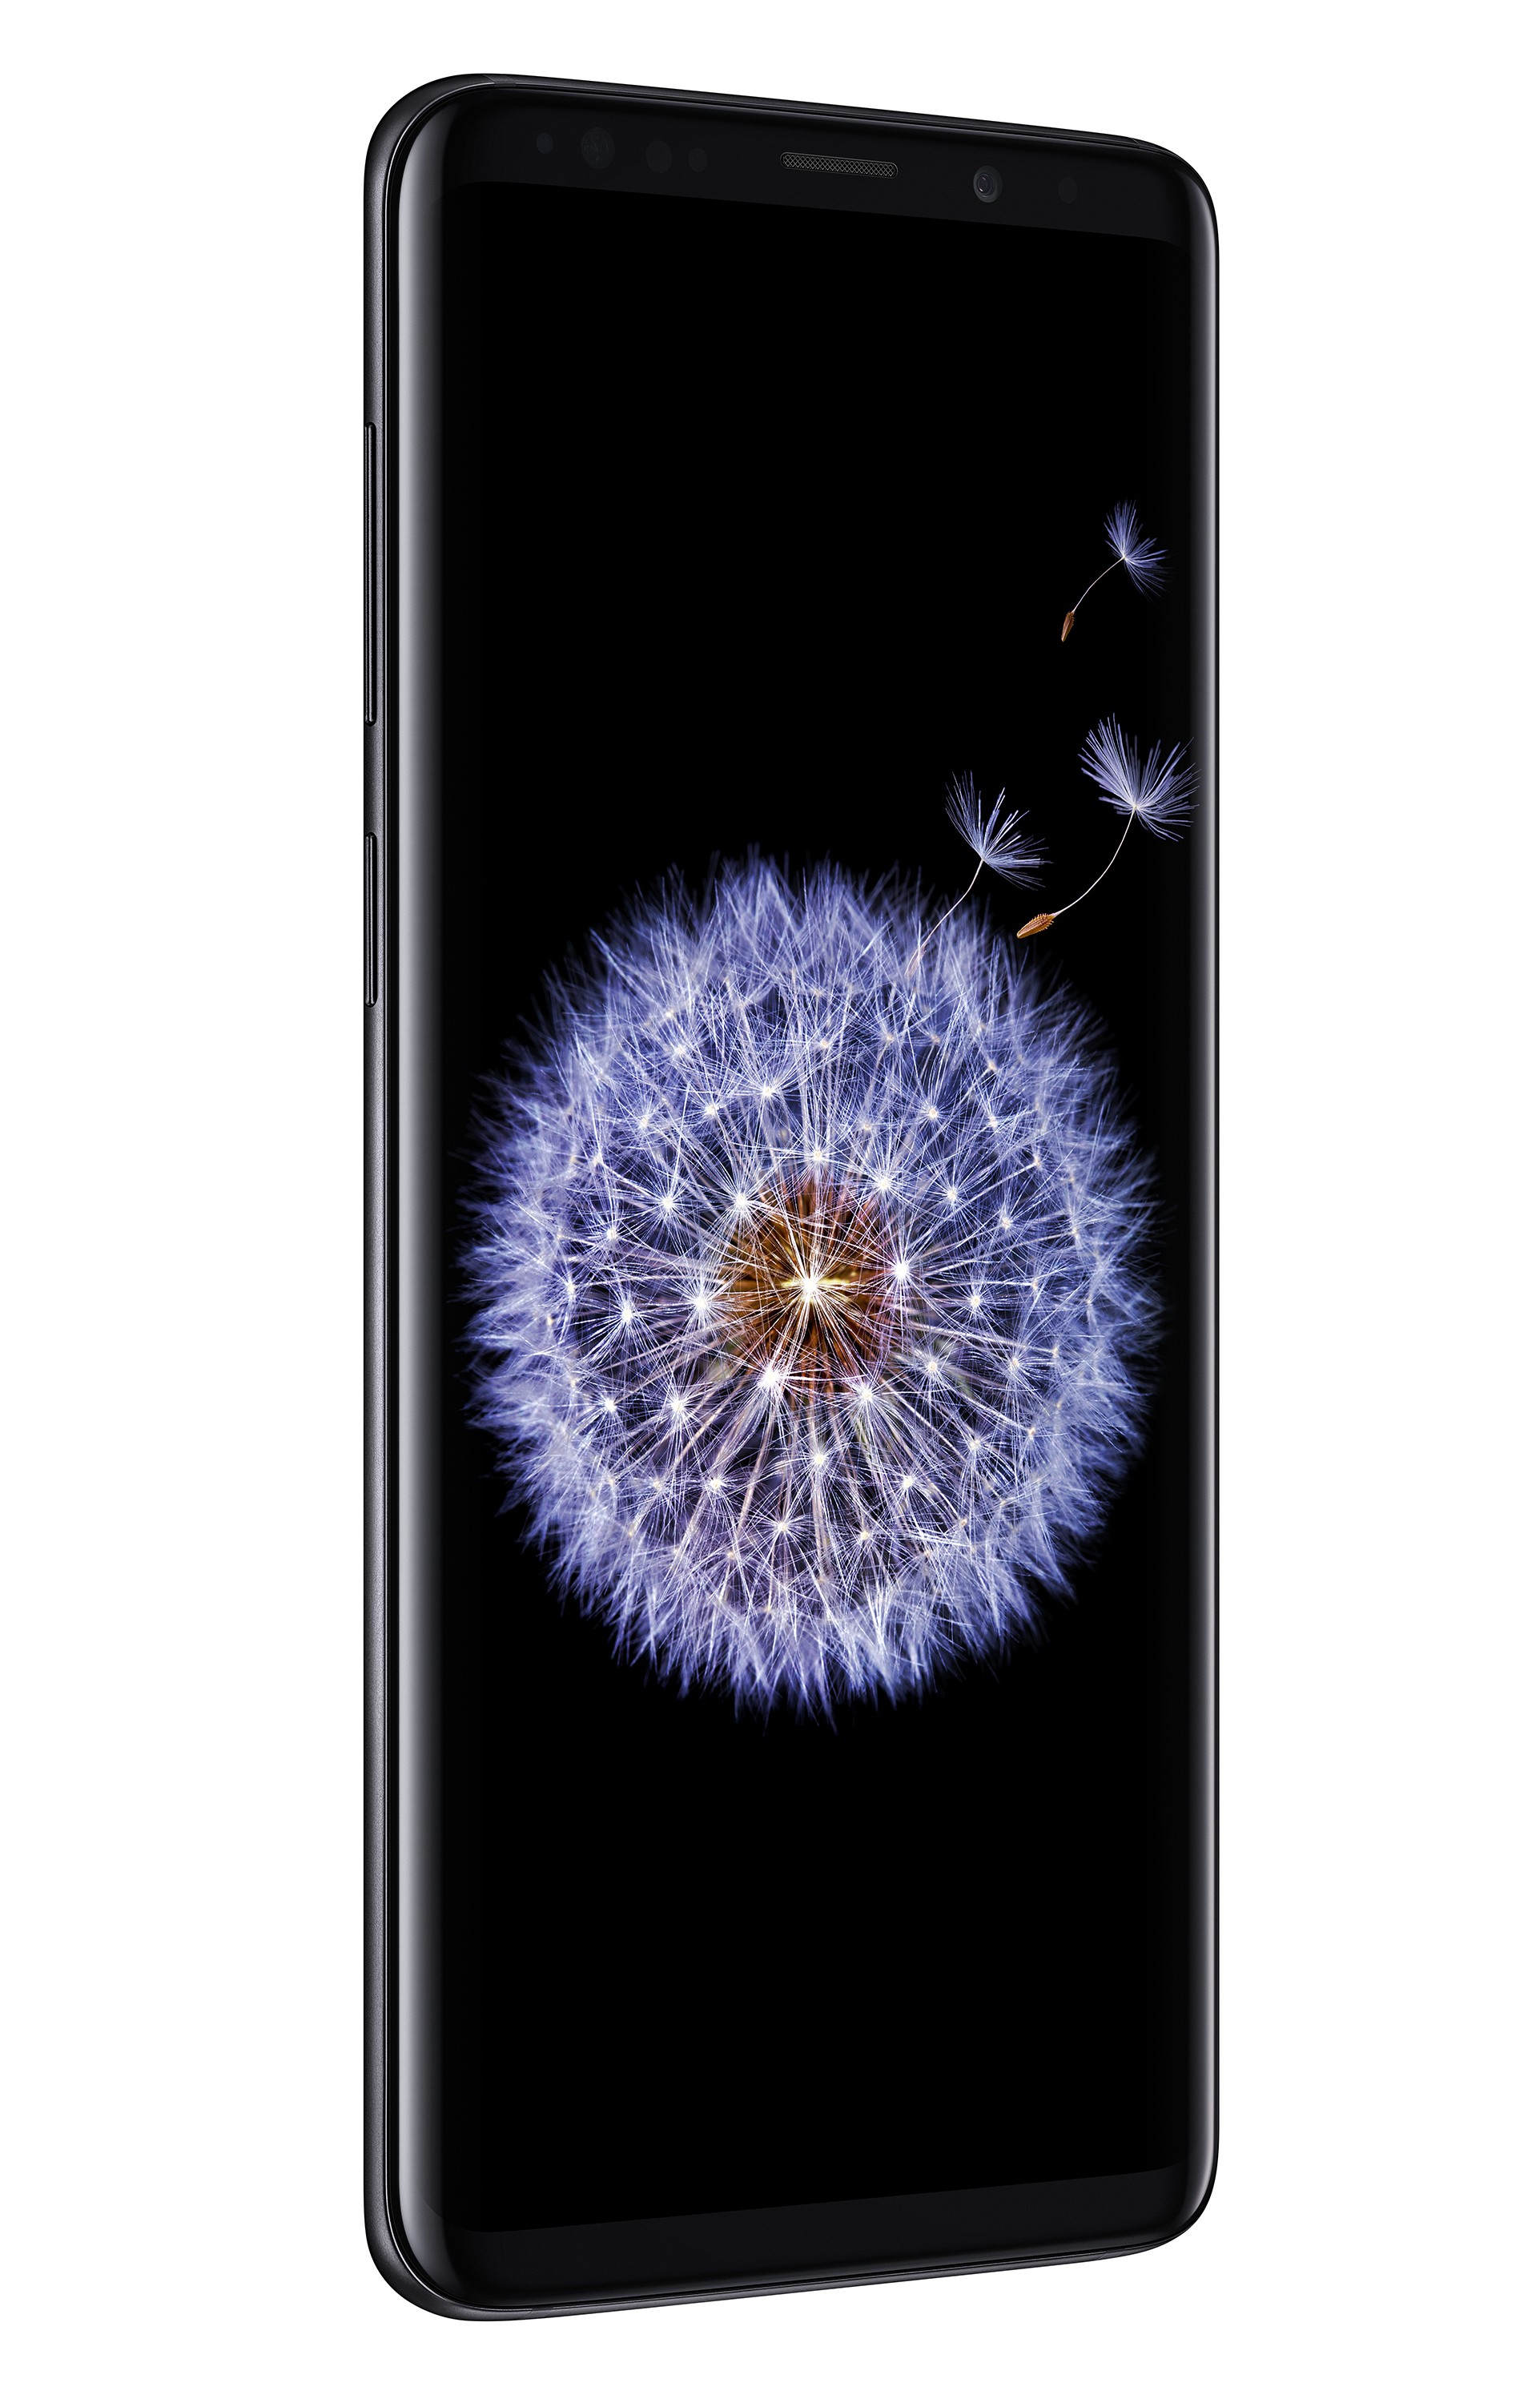 SAMSUNG Galaxy S9+ 64gb Unlocked Smartphone, Black - image 2 of 5